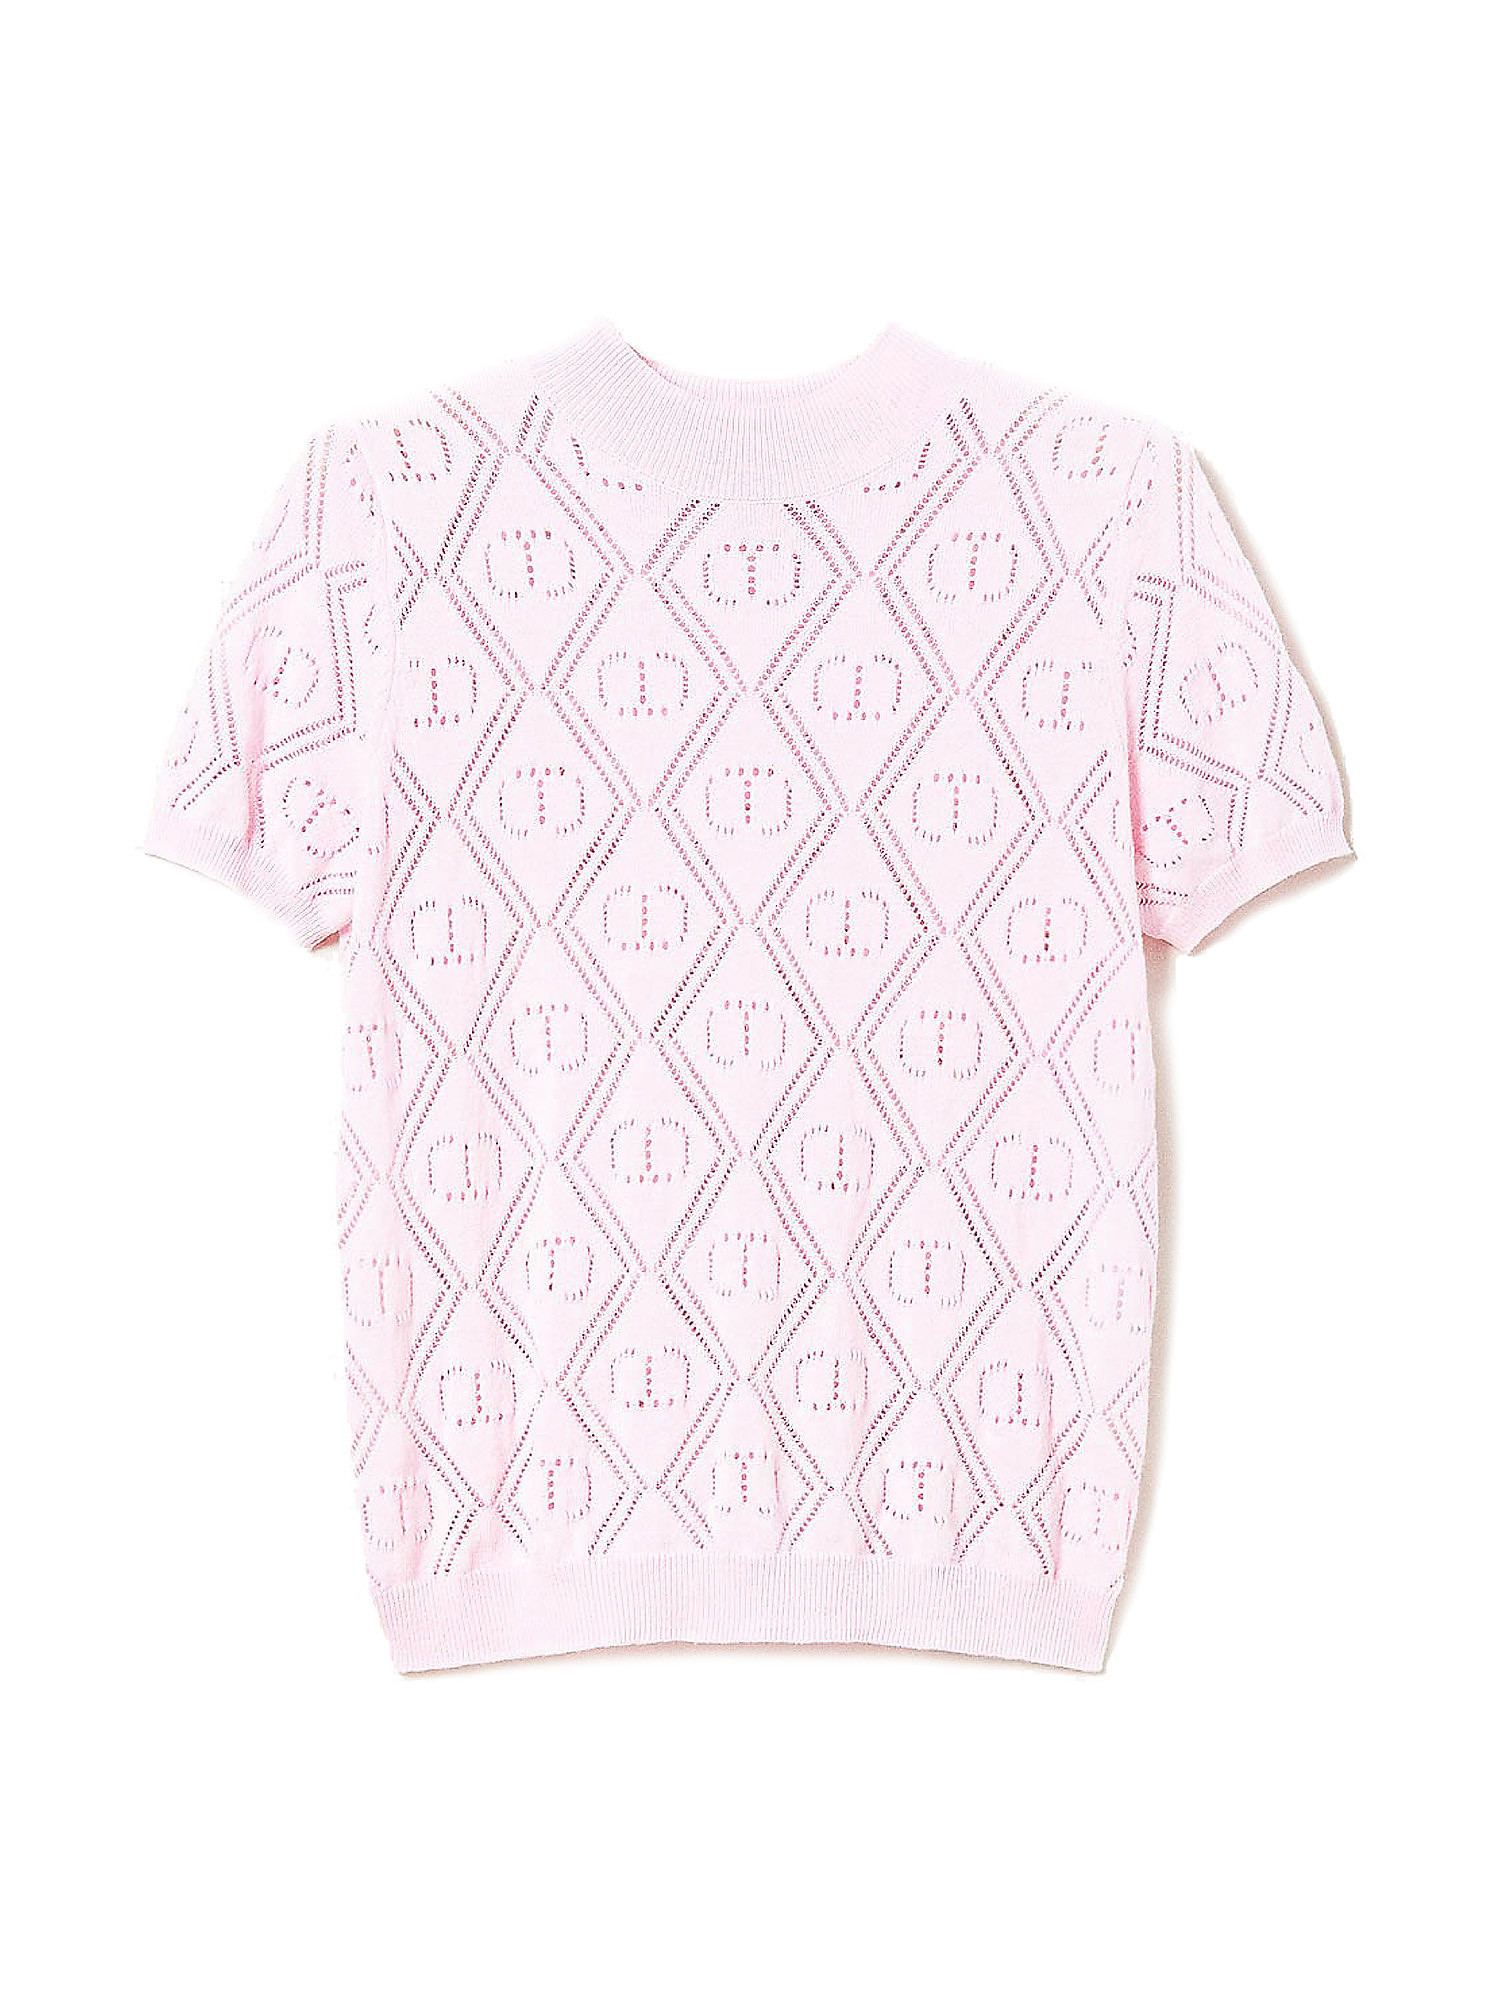 Mock turtleneck sweater with logo, Pink, large image number 0